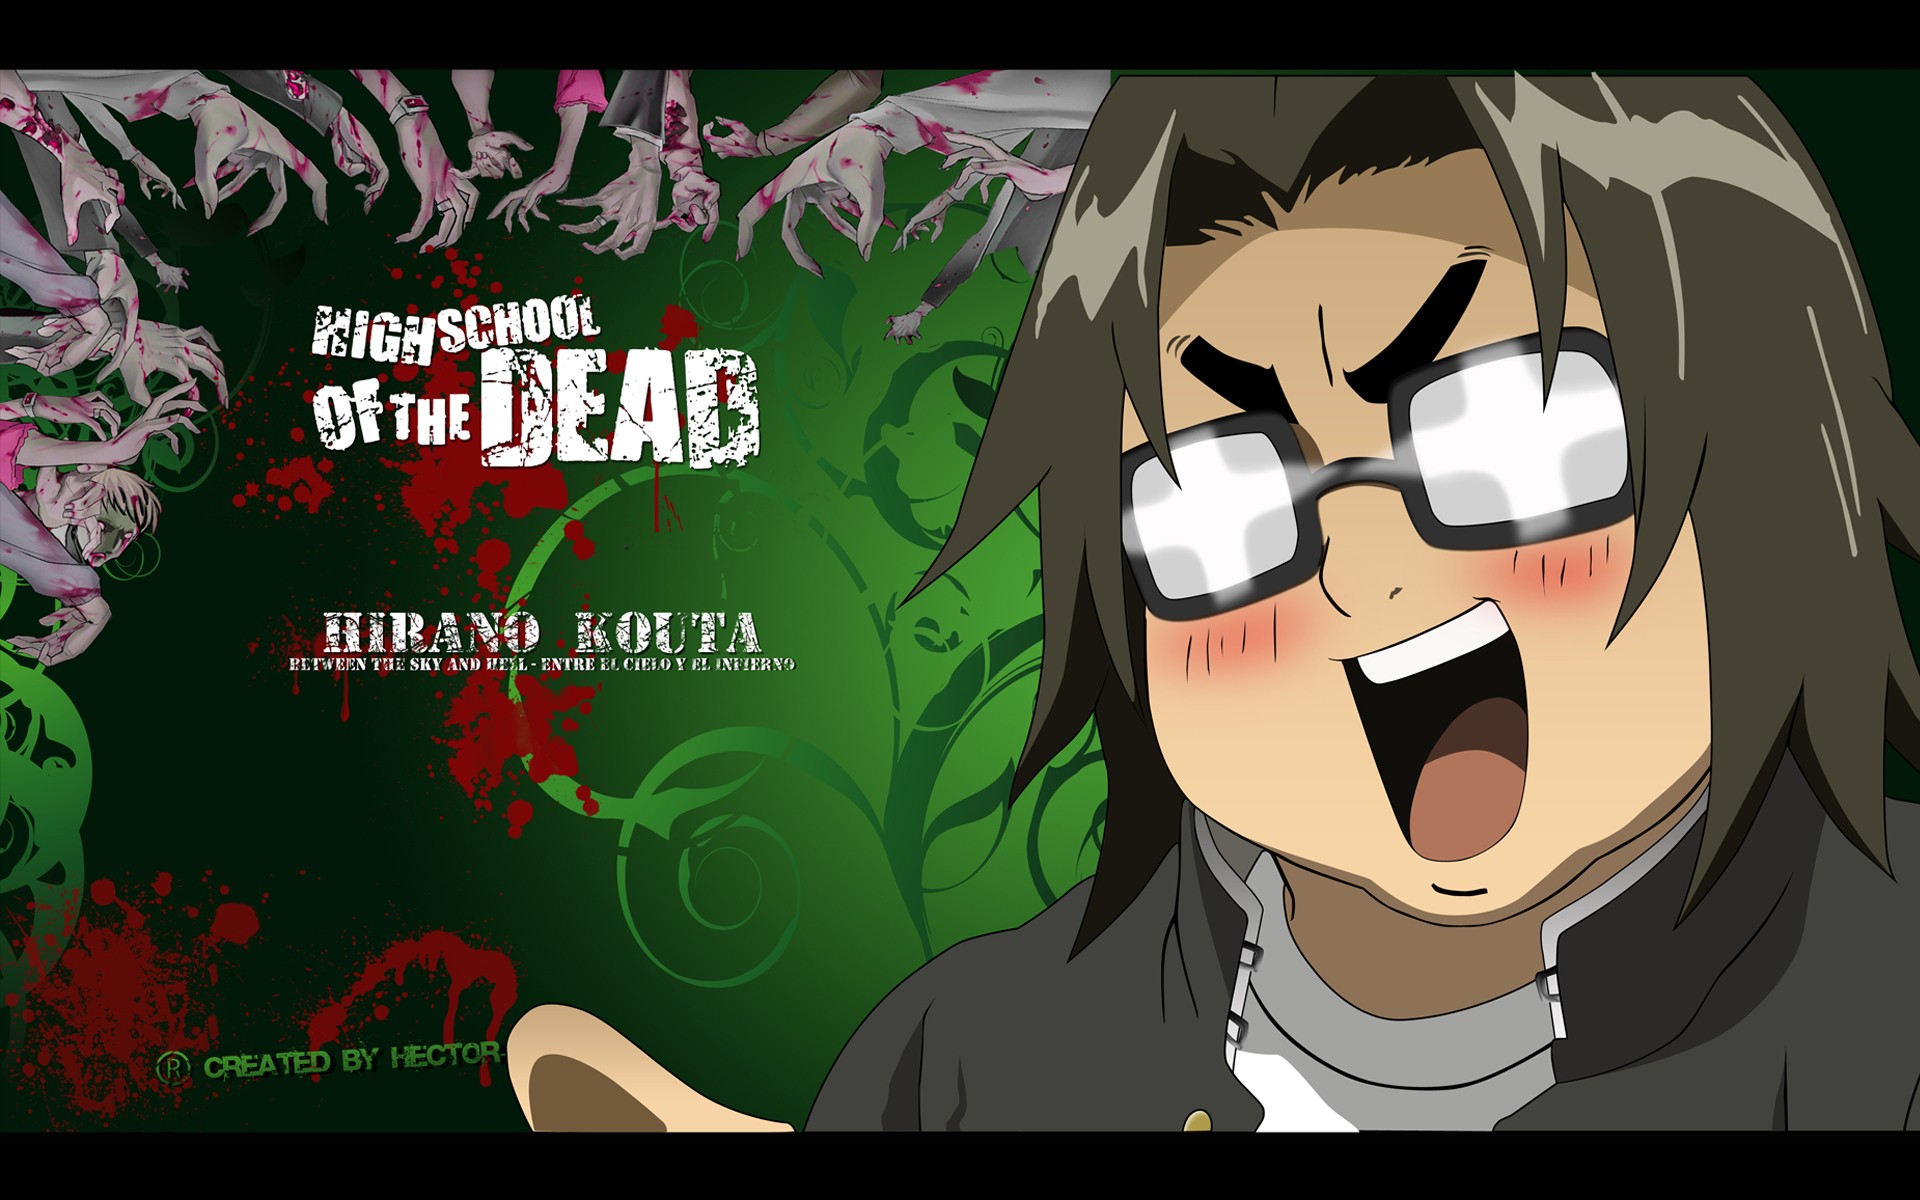 Anime 1920x1200 manga Highschool of the Dead Kouta Hirano anime boys green background